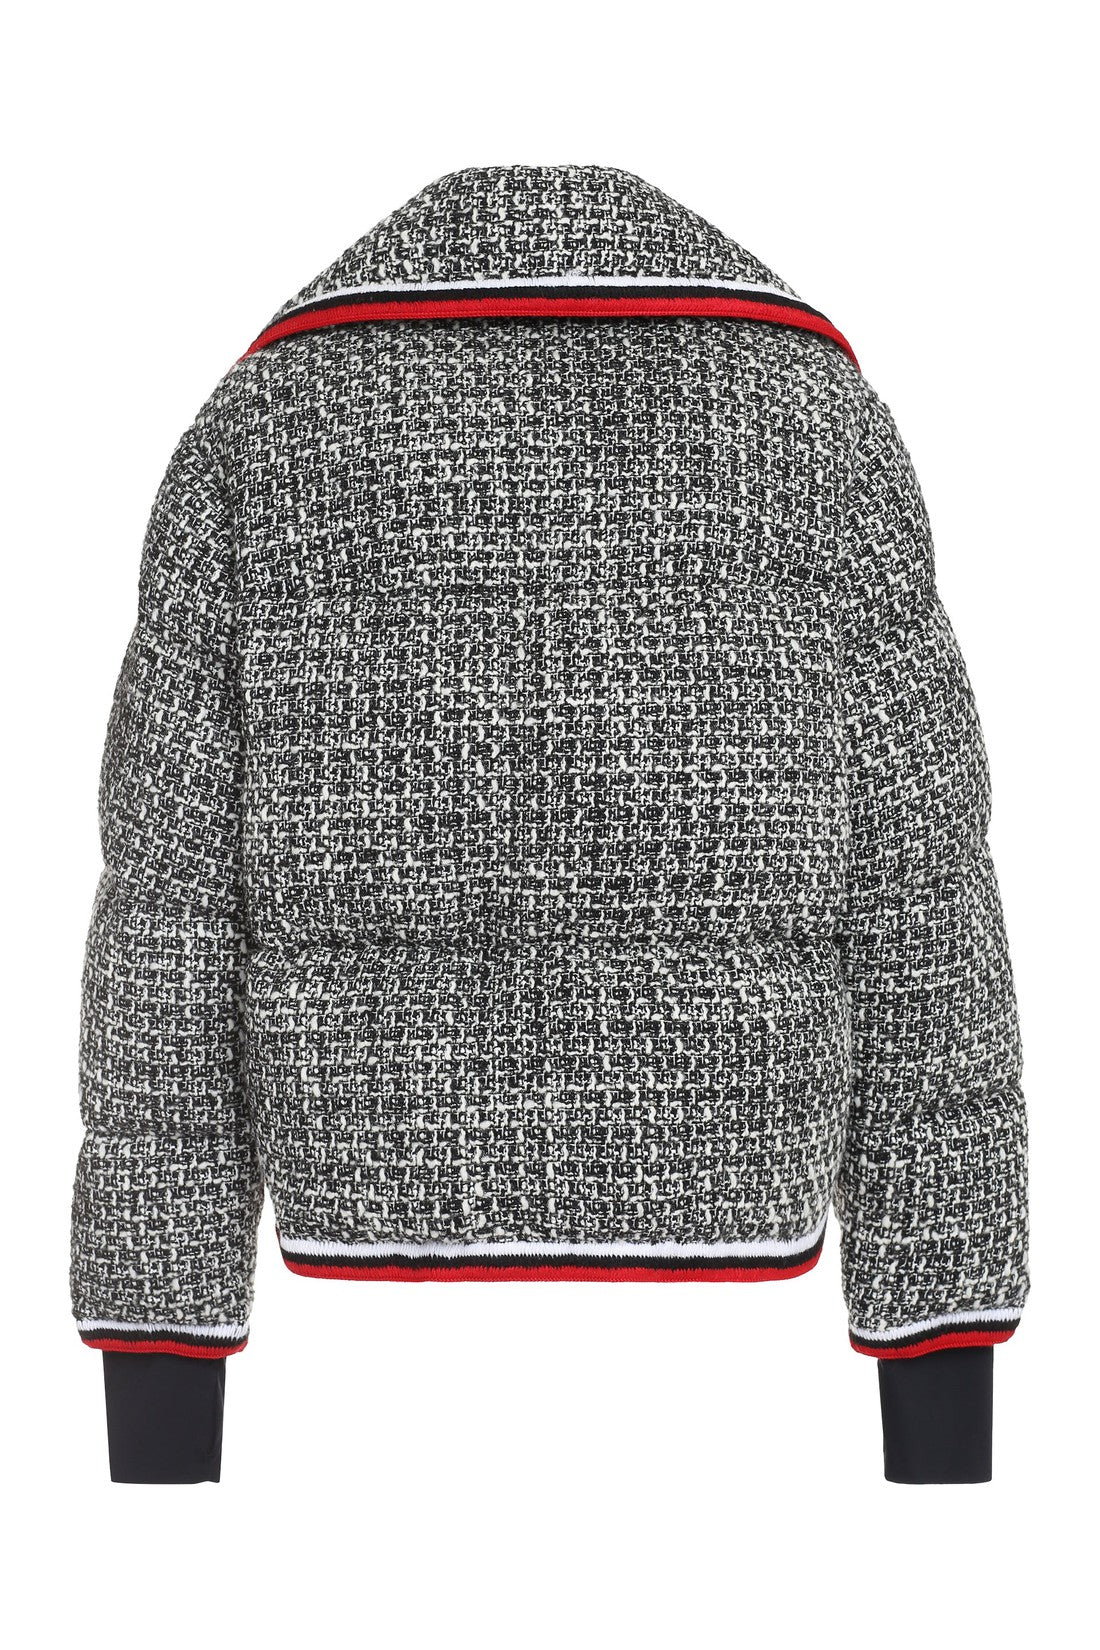 Moncler Grenoble-OUTLET-SALE-Eterlou padded knit jacket-ARCHIVIST